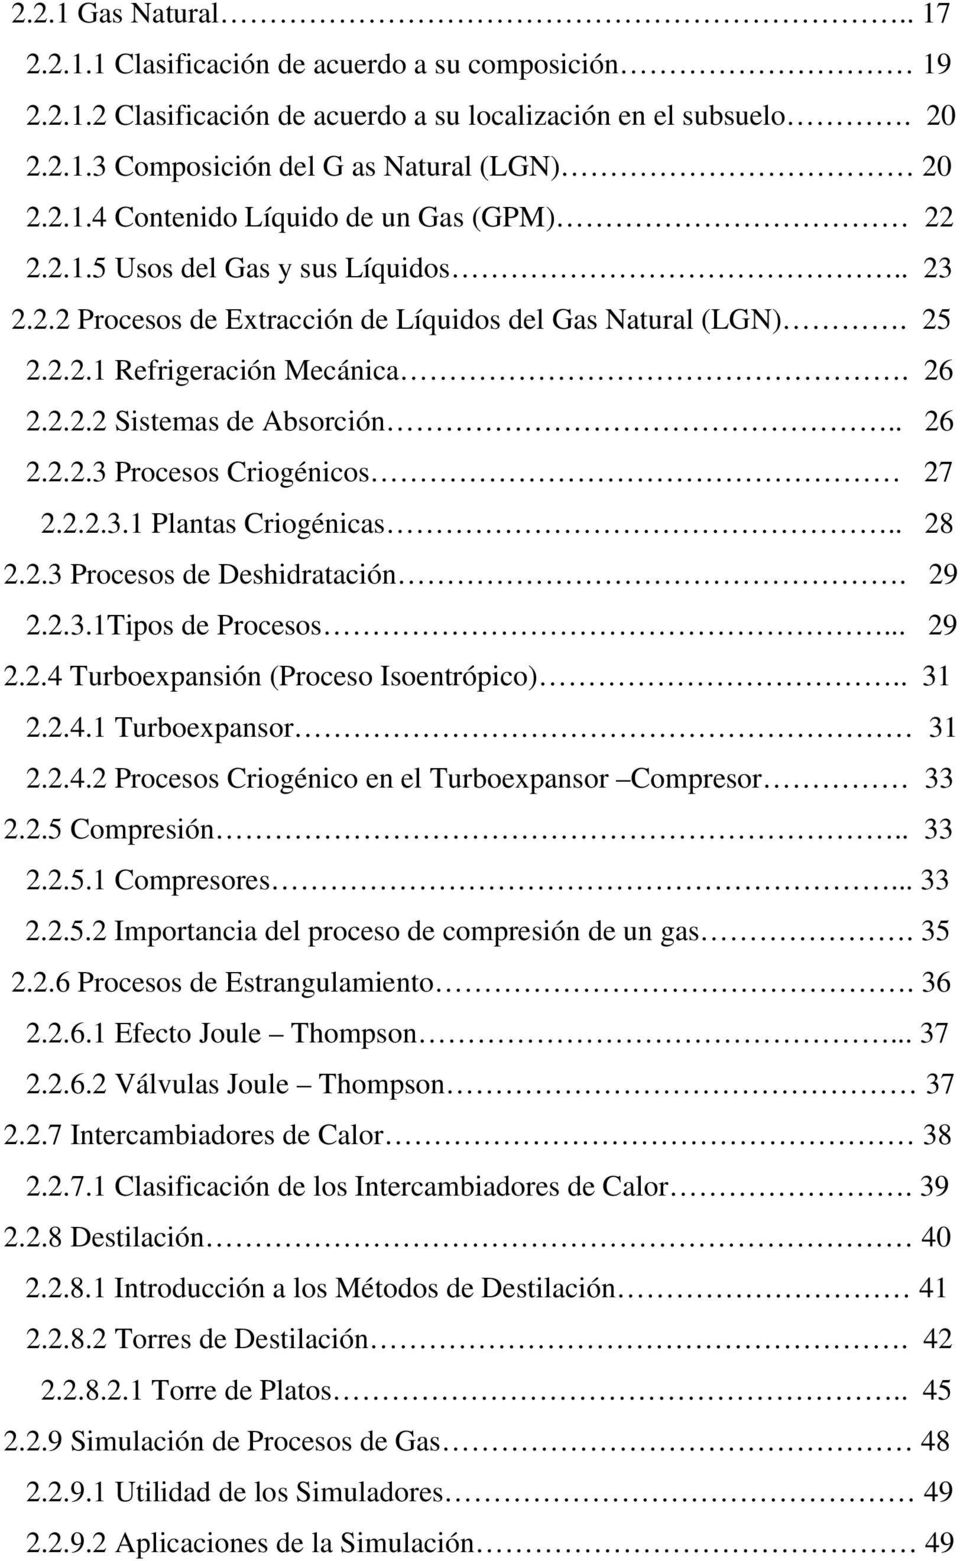 2.2.3.1 Plantas Criogénicas.. 28 2.2.3 Procesos de Deshidratación. 29 2.2.3.1Tipos de Procesos... 29 2.2.4 Turboexpansión (Proceso Isoentrópico).. 31 2.2.4.1 Turboexpansor 31 2.2.4.2 Procesos Criogénico en el Turboexpansor Compresor 33 2.